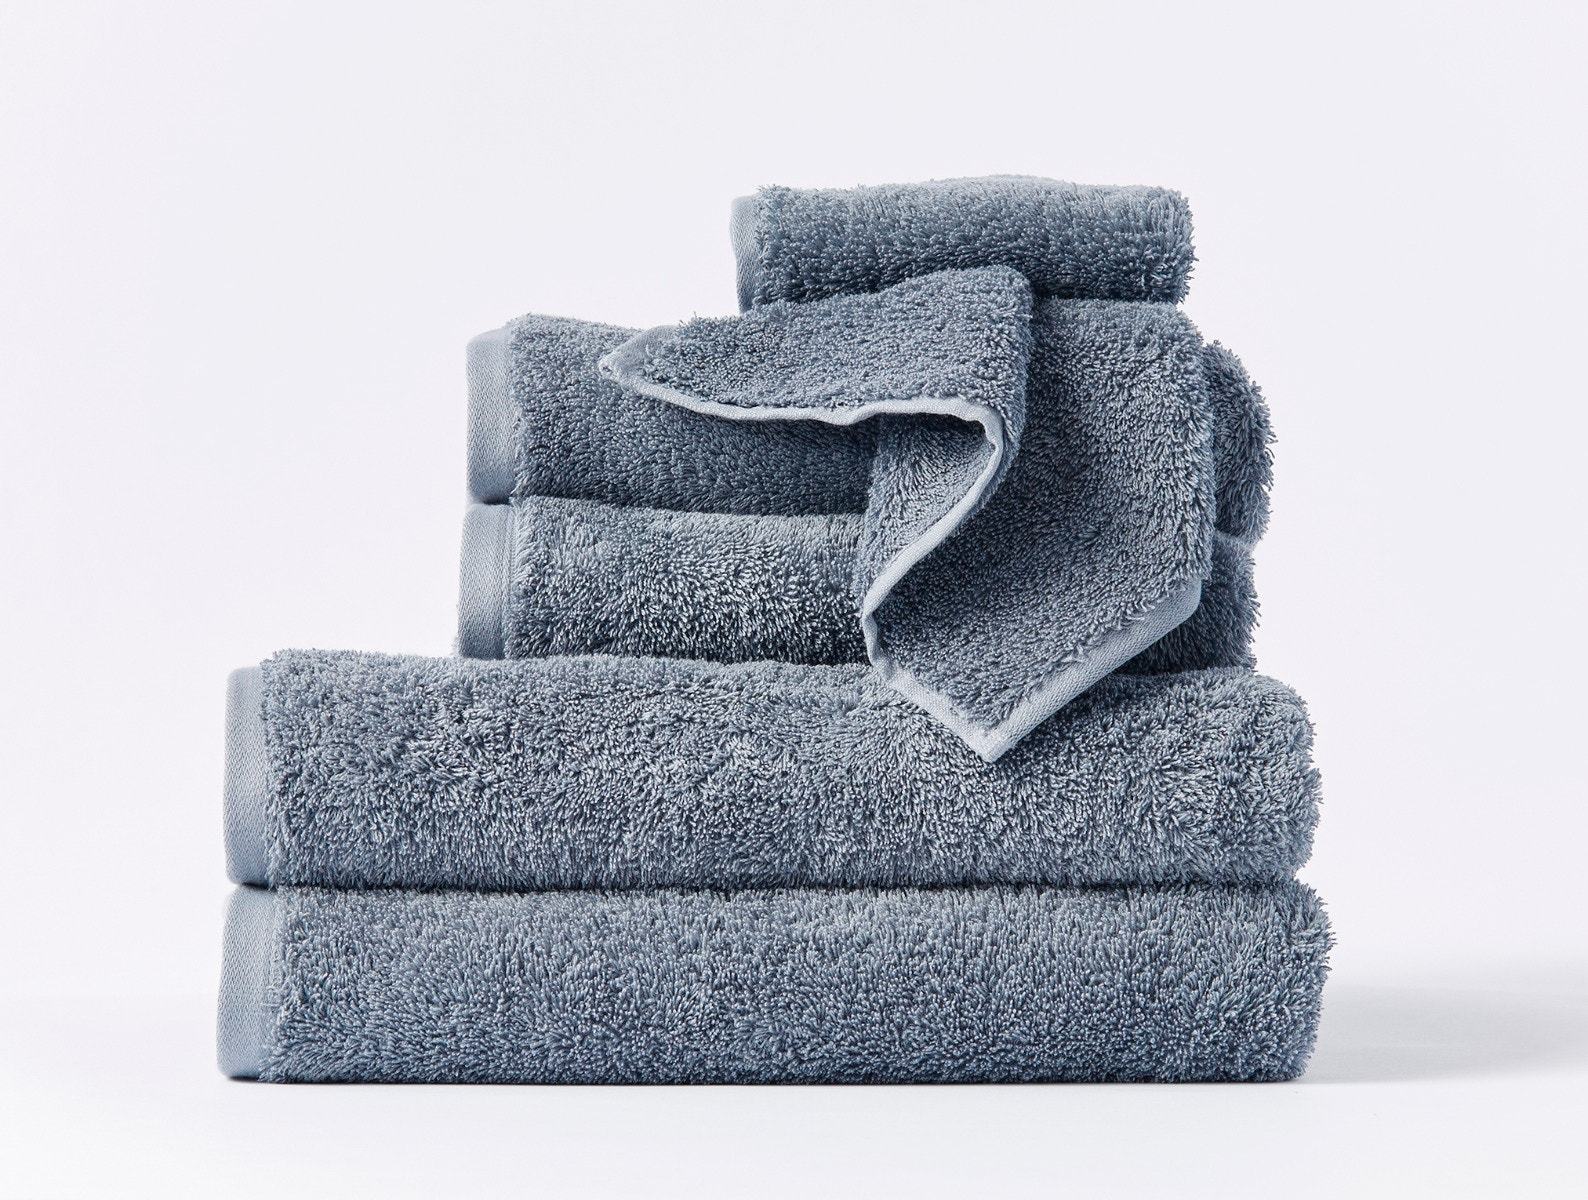 Geronimo 1609x1 Blue Koi Fish Towel, Towels - Beach Towels, Fashion  clothing online store